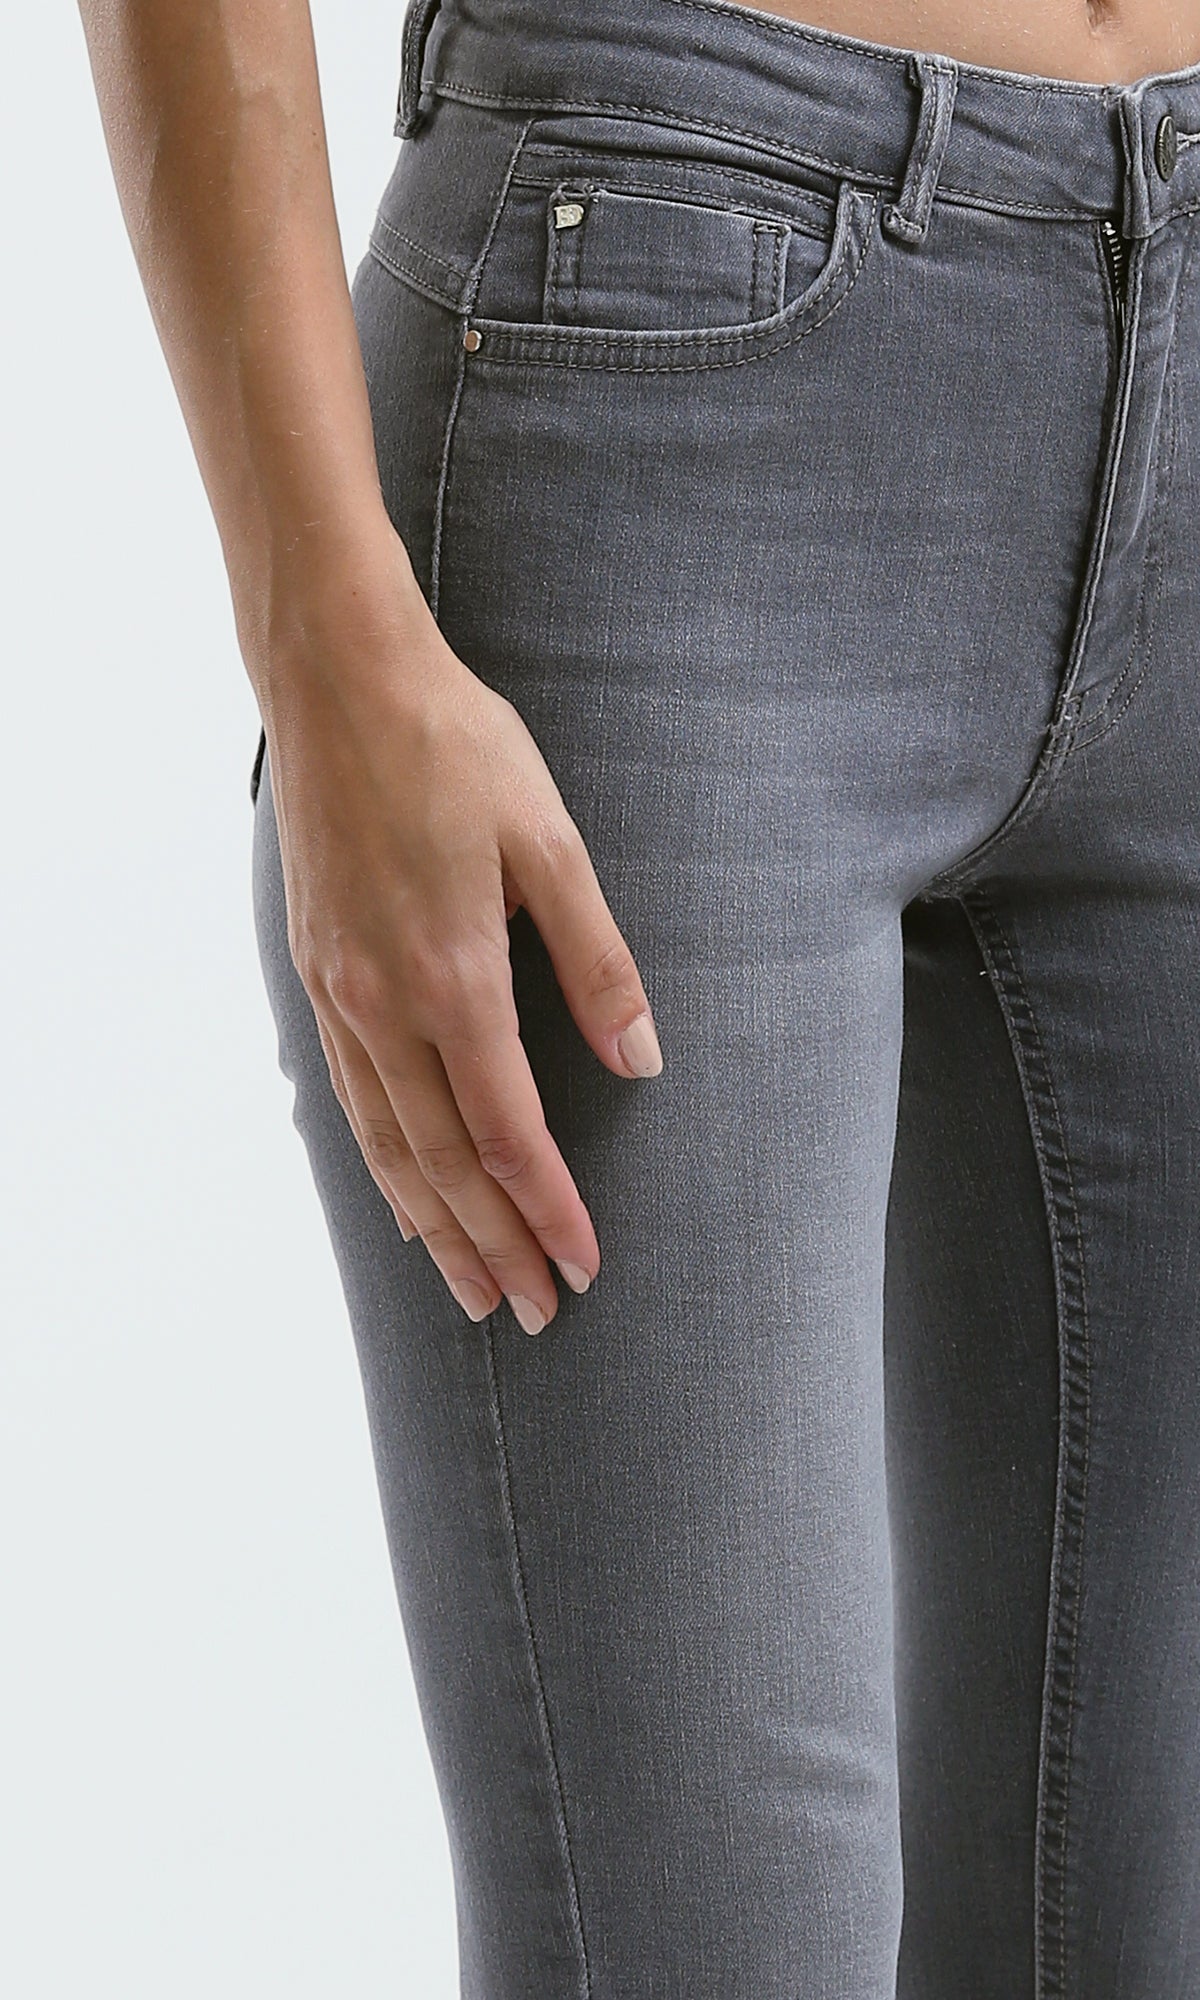 O190267 Feminine Grey Skinny Jeans With Five Pockets